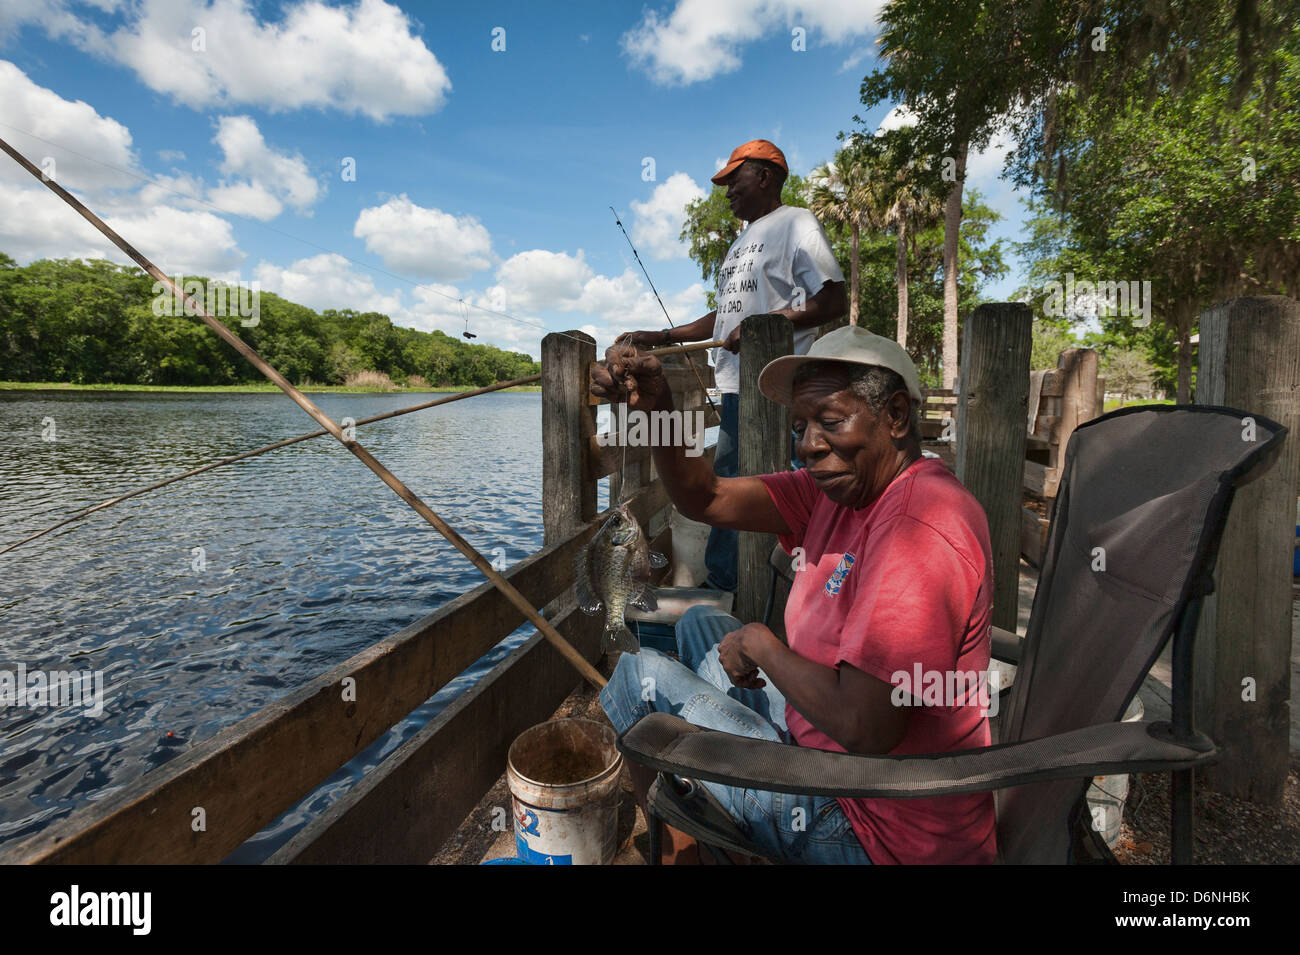 https://c8.alamy.com/comp/D6NHBK/black-woman-fishing-for-mullet-on-the-stjohns-river-in-central-florida-D6NHBK.jpg